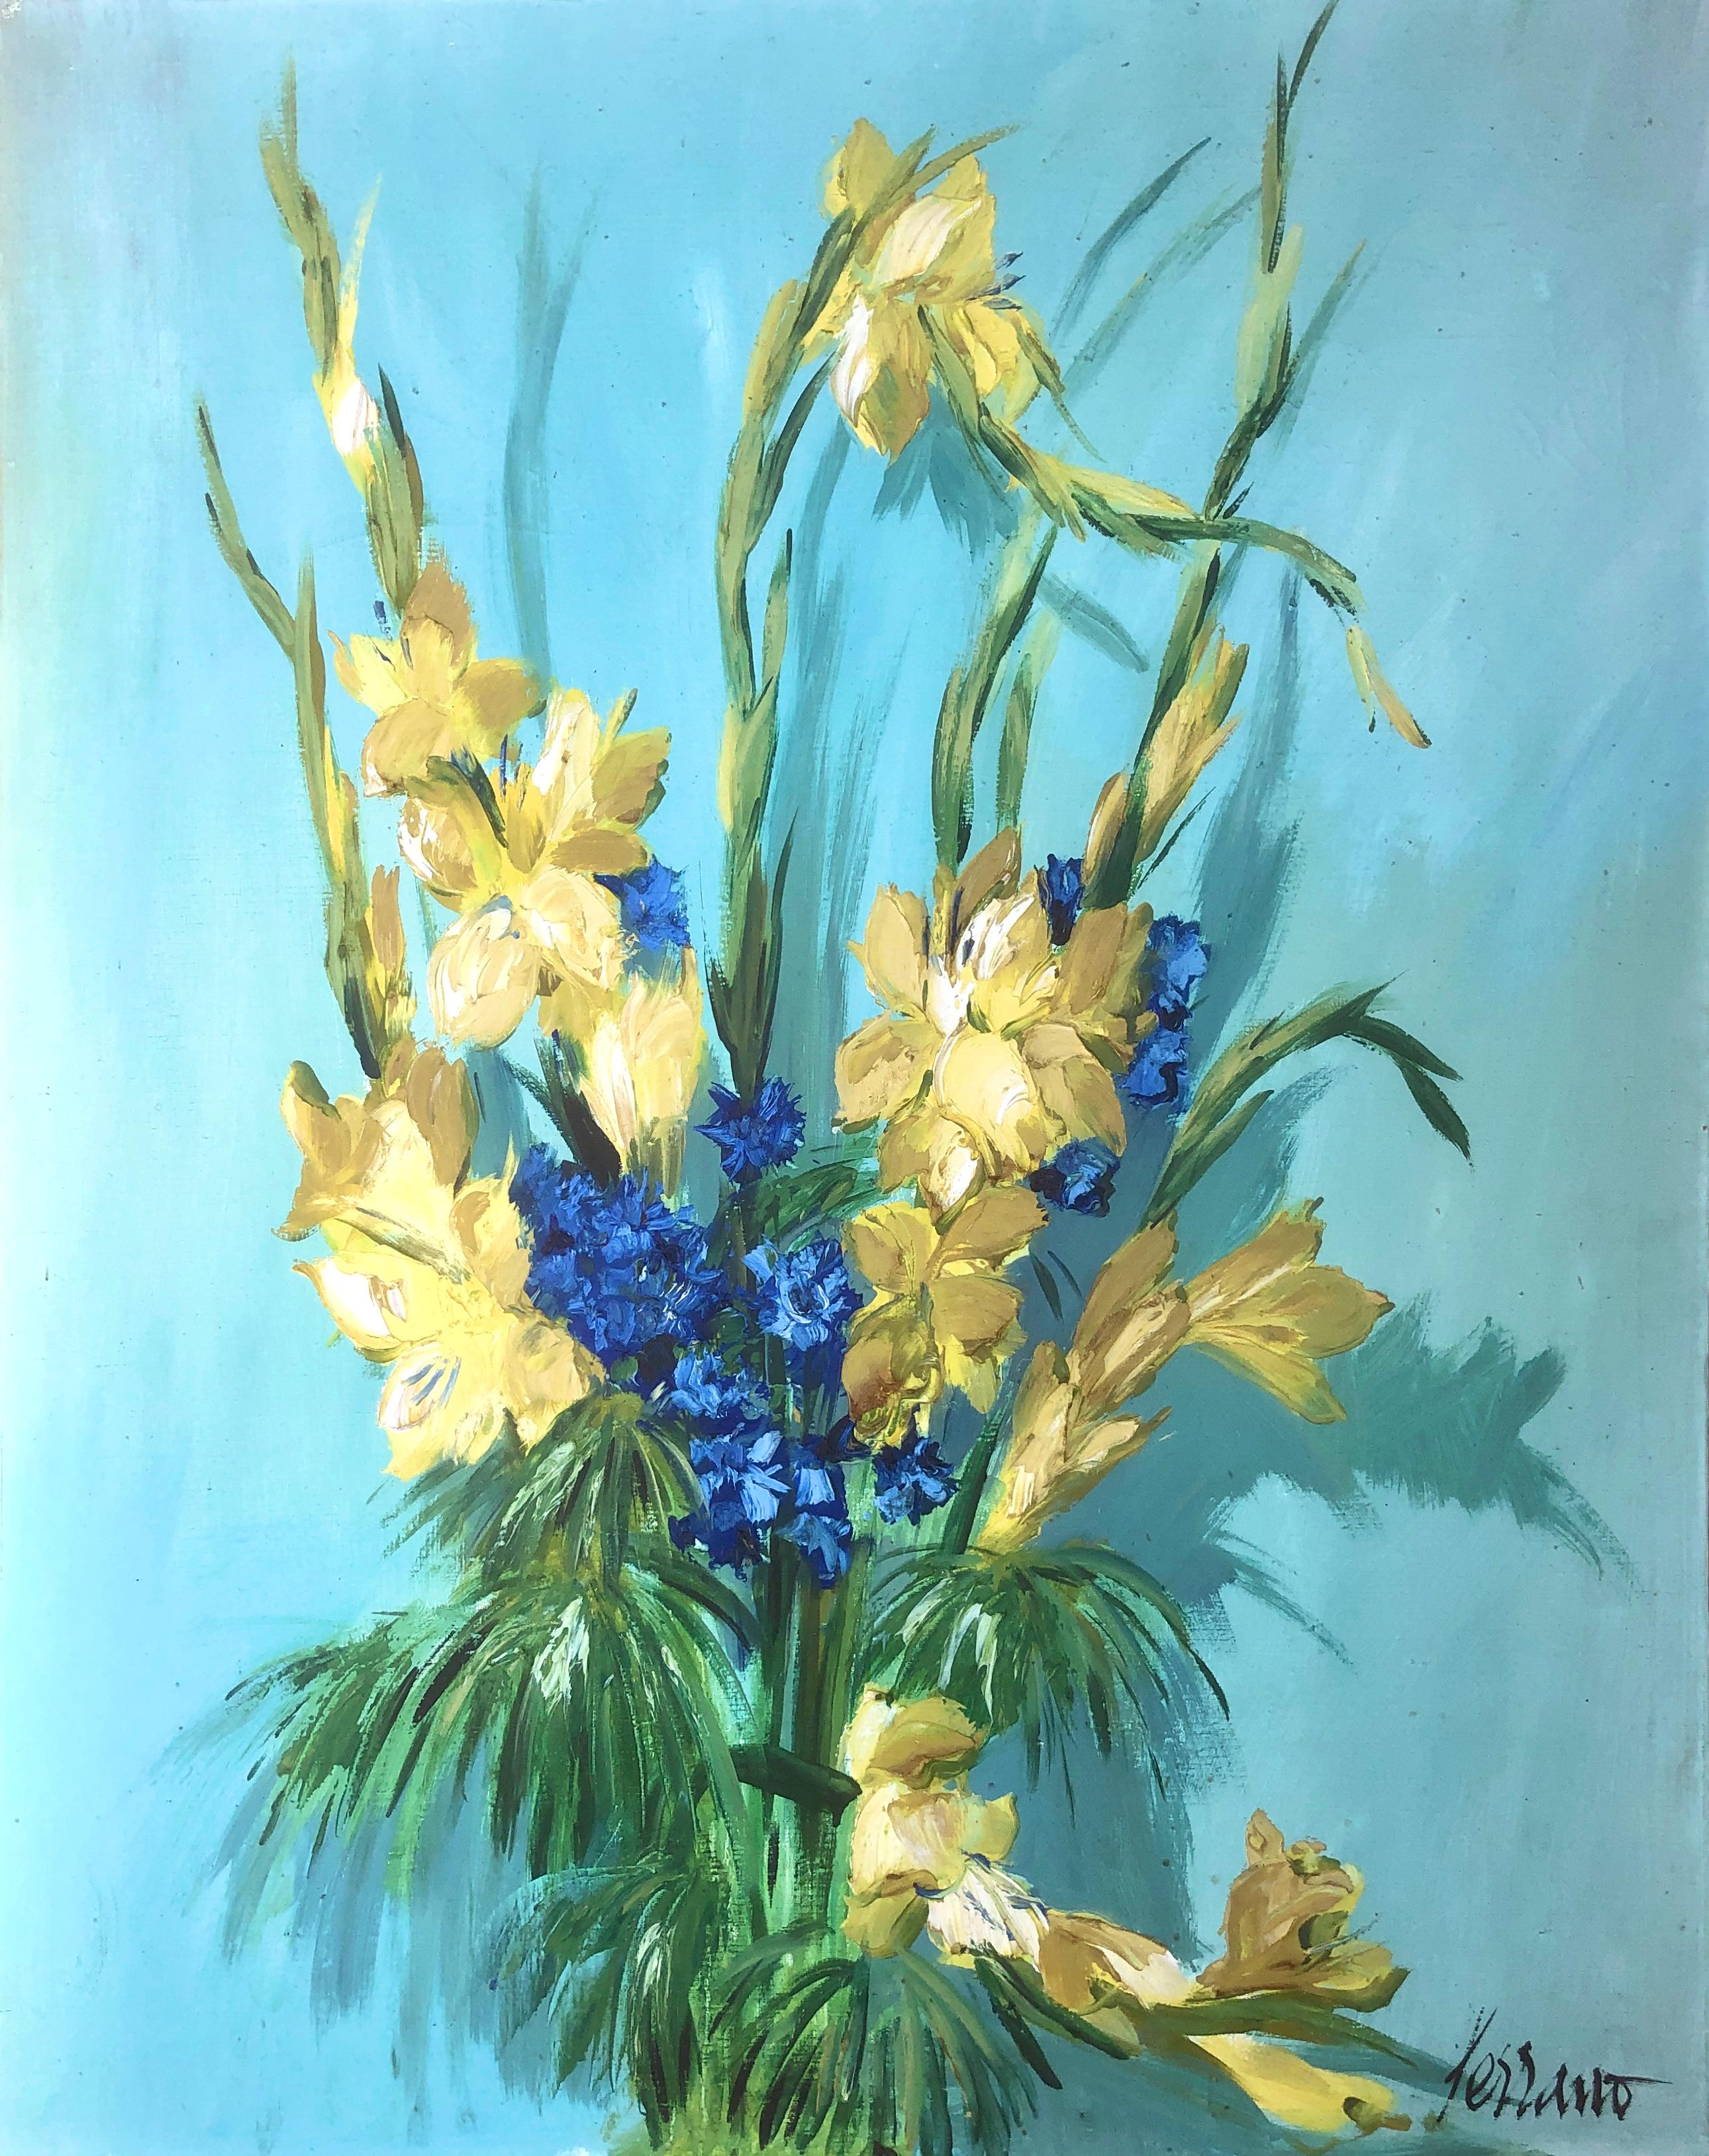 Josep Miquel Serrano Still-Life Painting - Flowers still-life oil on canvas painting